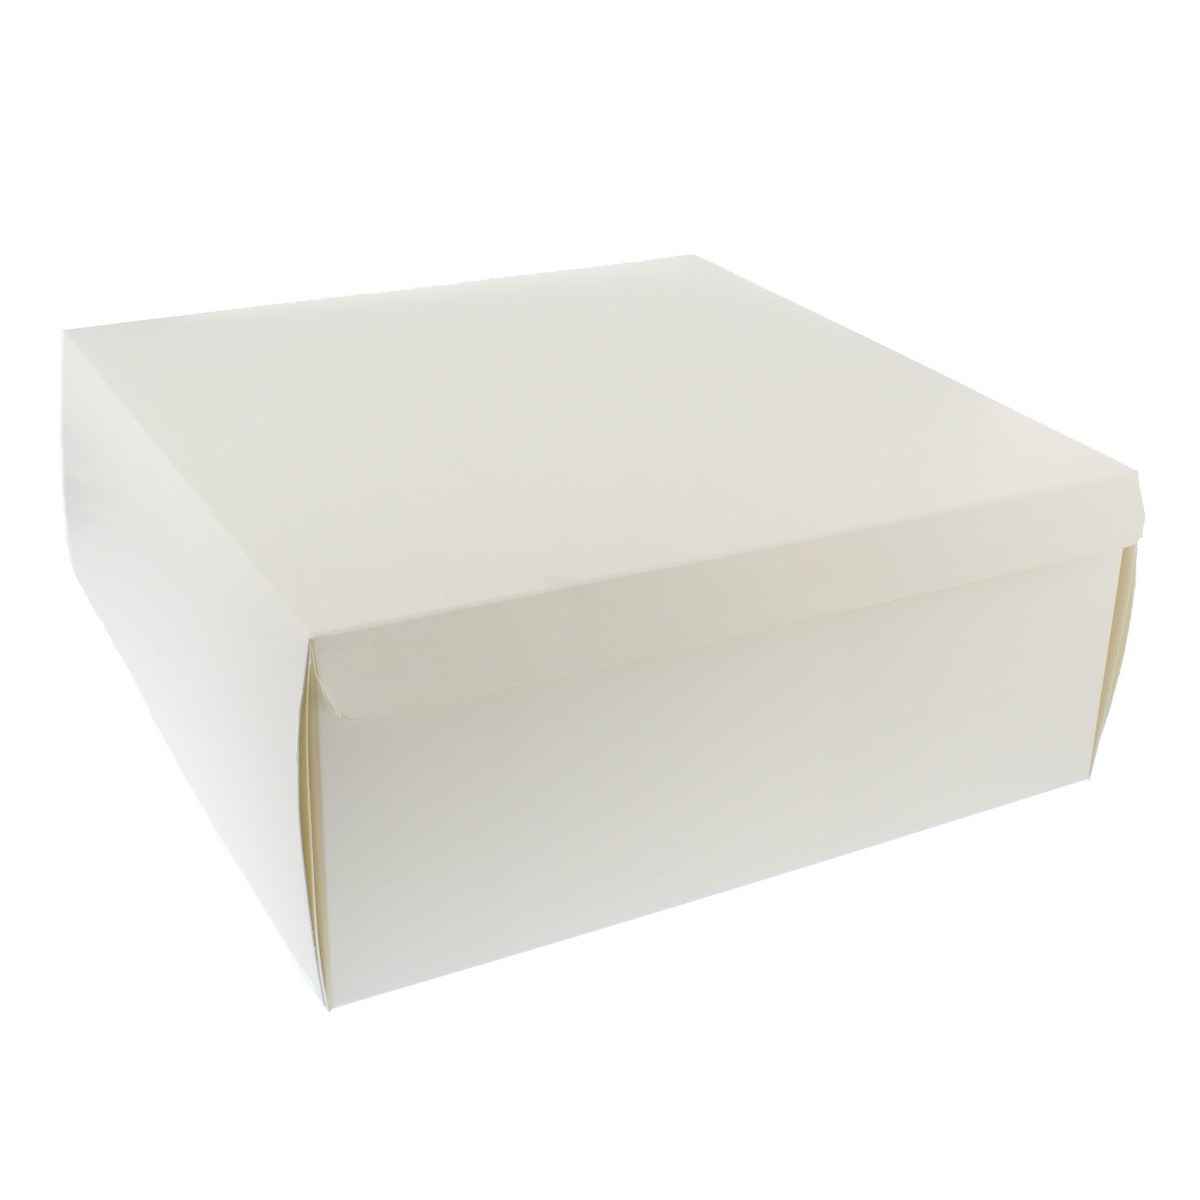 White Cake Boxes 8 X 8 X 4 Inch 250GSM 410 Micron -